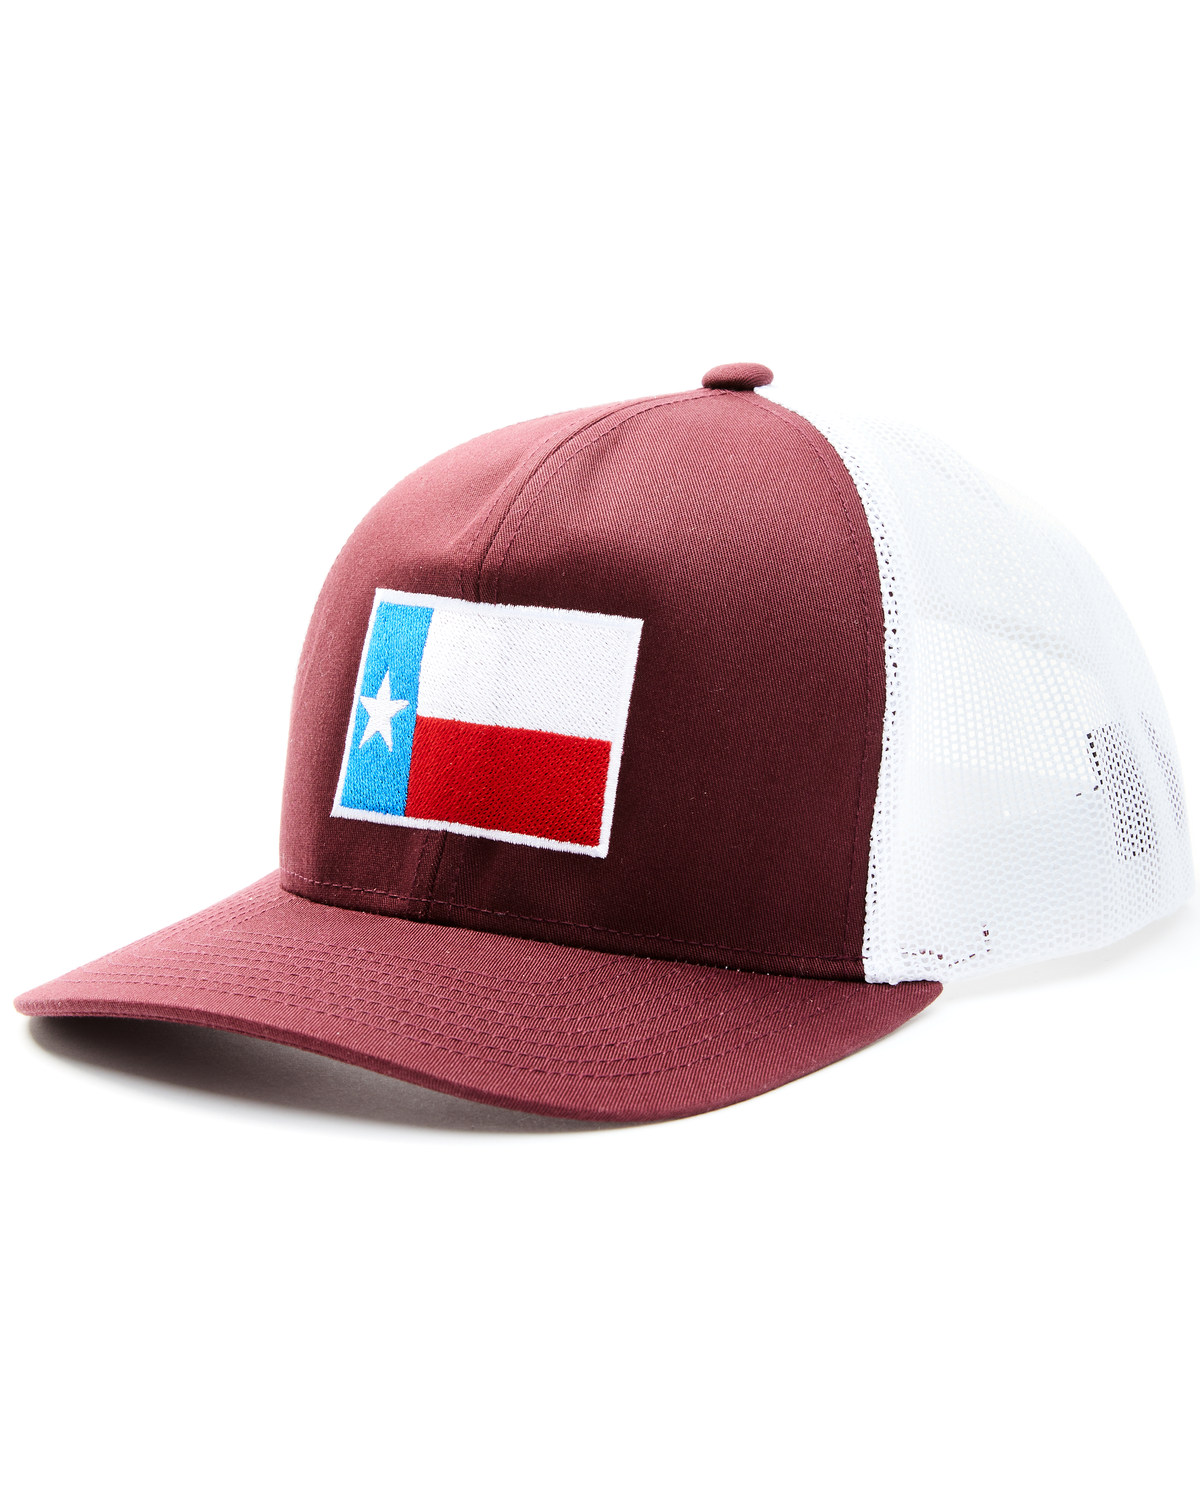 Oil Field Hats' Men's Red & White Texas Flag Patch Mesh-Back Ball Cap